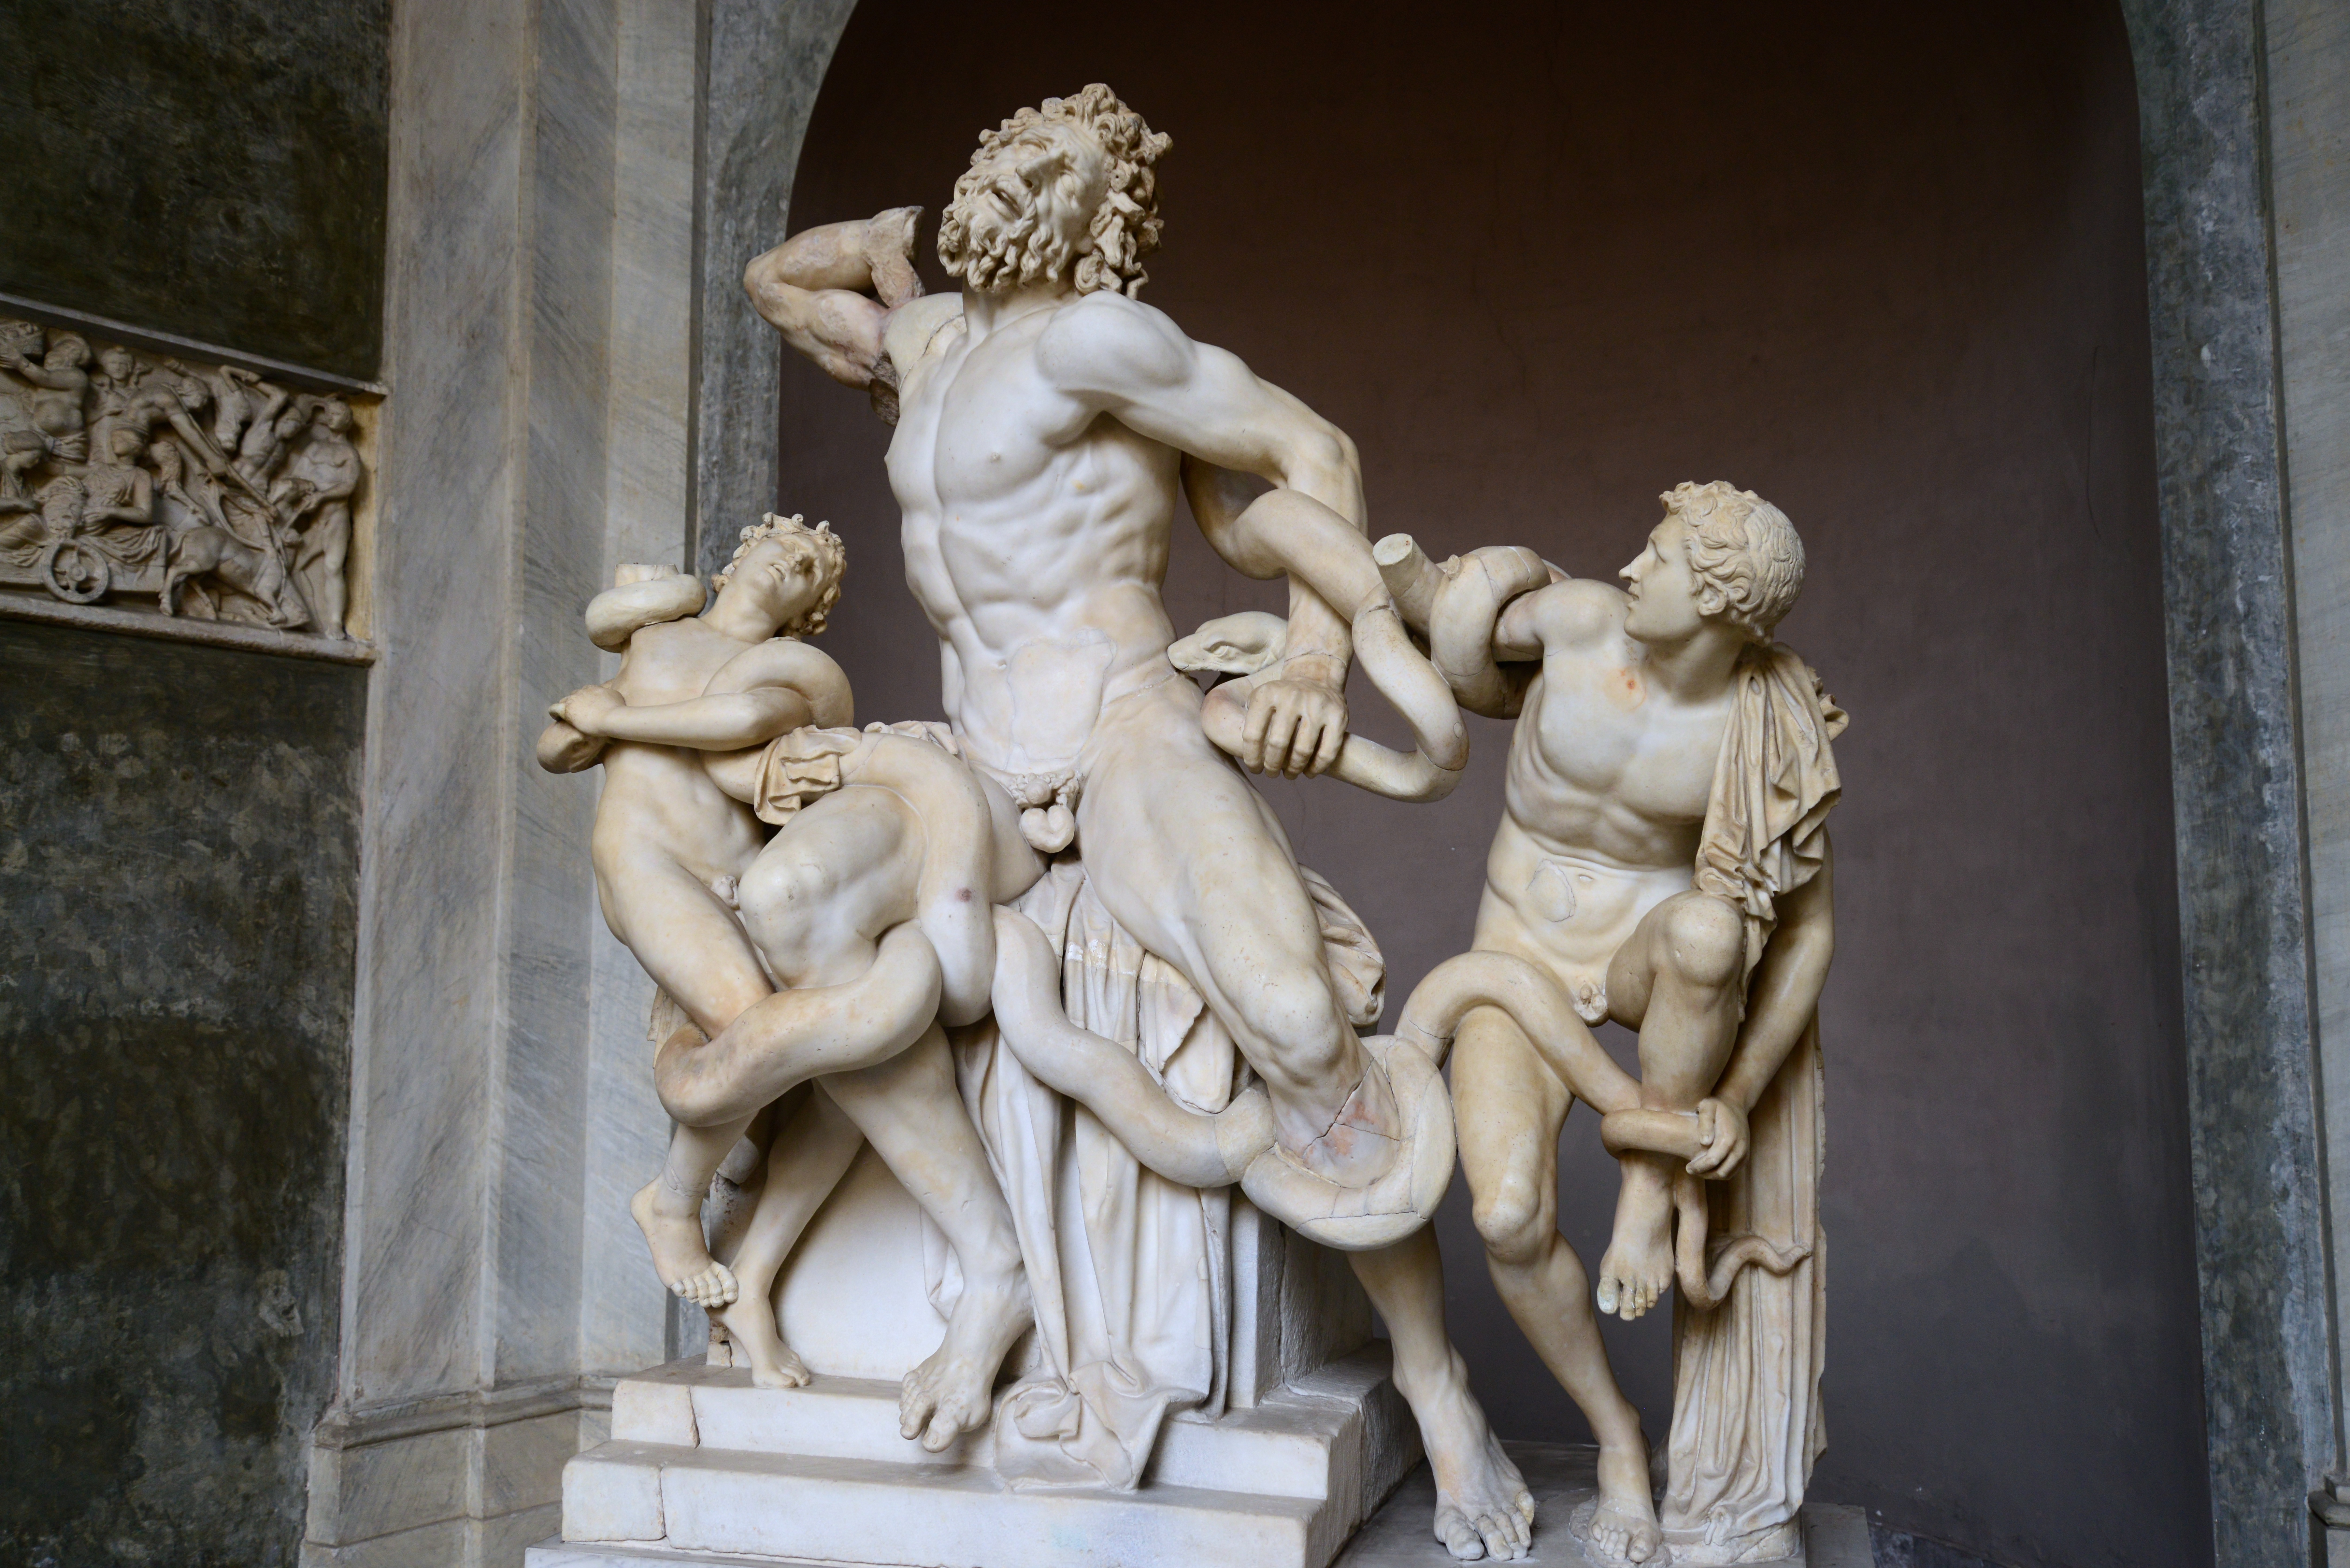 Escultura romana no Museu do Vaticano